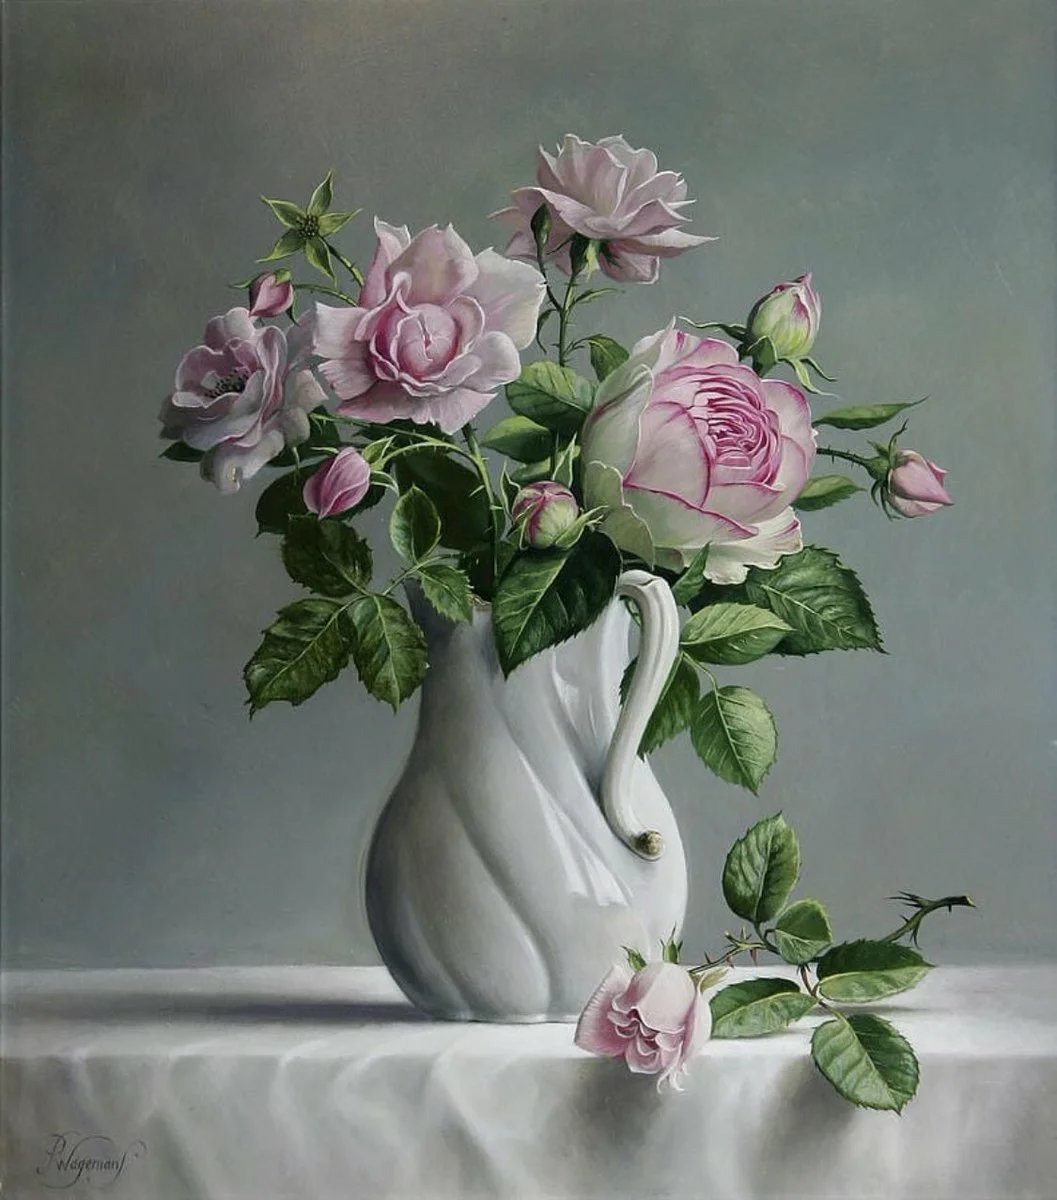 Питер Вагеманс. Розы в вазе - цветы, натюрморт, роза, ваза, живопись - оригинал